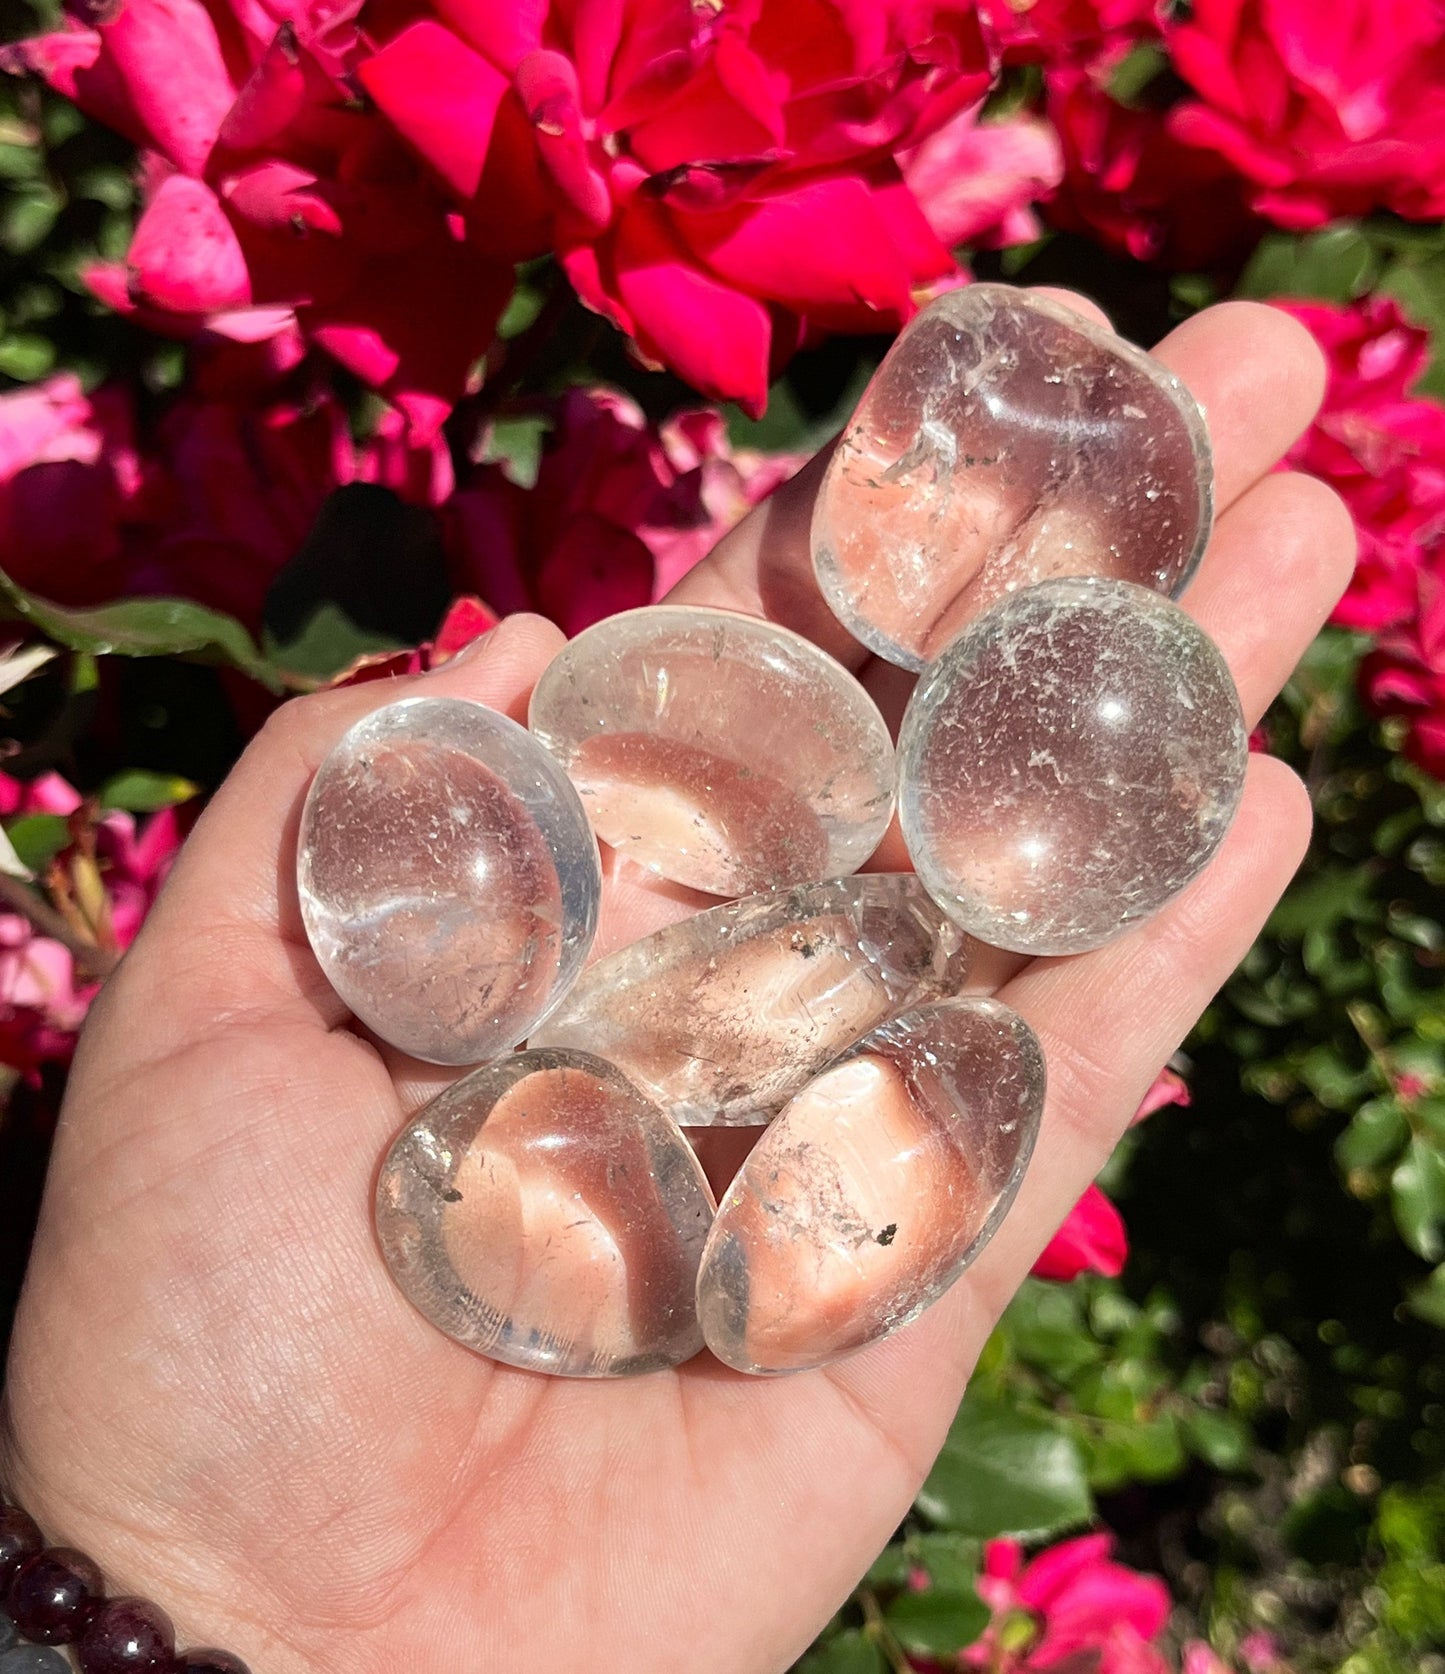 Ultra Clear High Quality Garden Quartz Tumbles Palm Stone ~ Pocket Stones Minerals Crystals ~